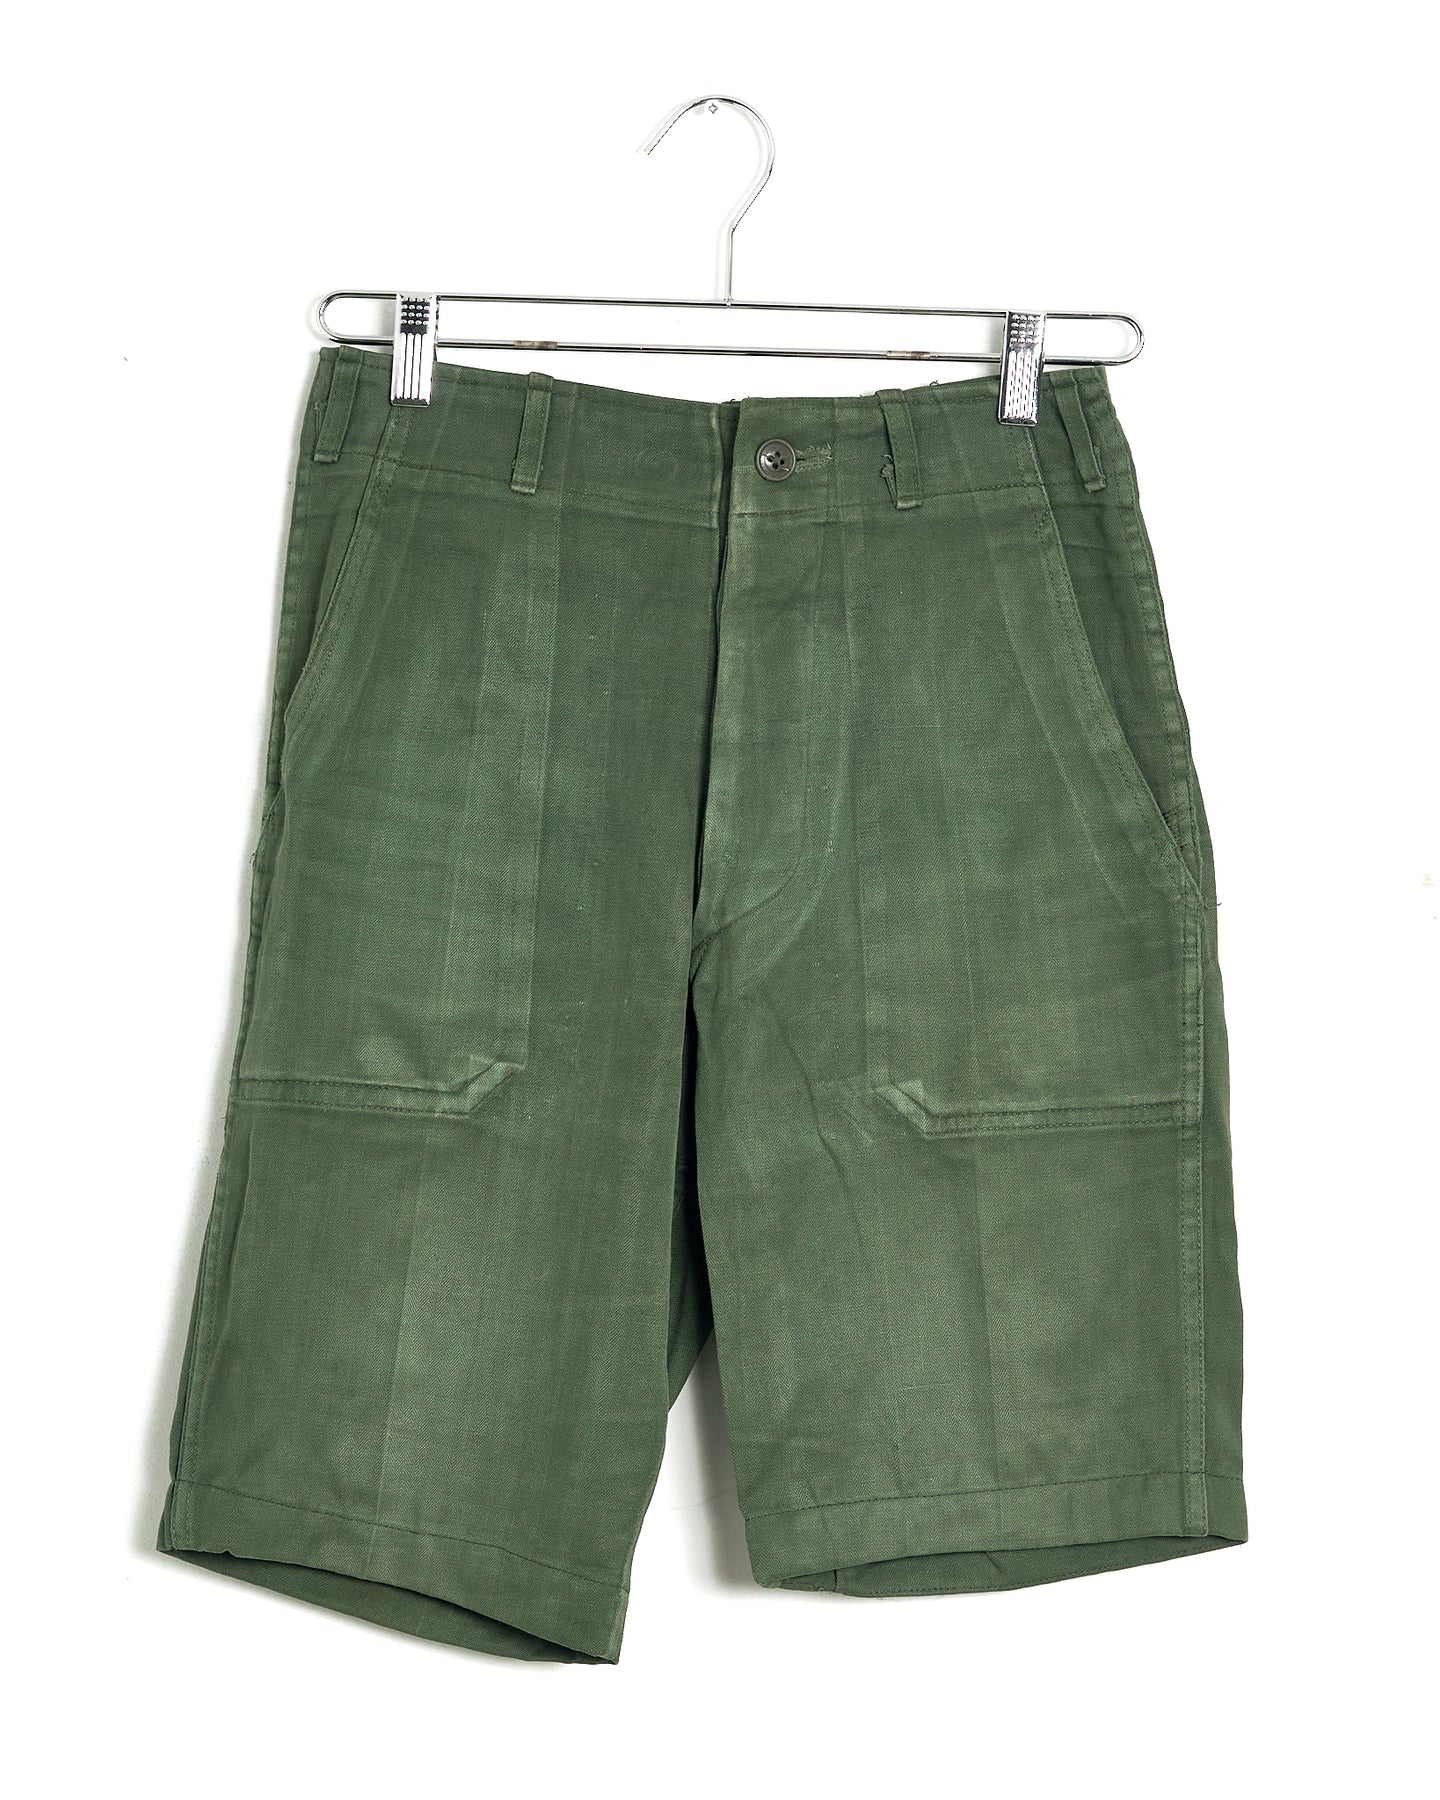 1950s/60s Korean War HBT Shorts - 27